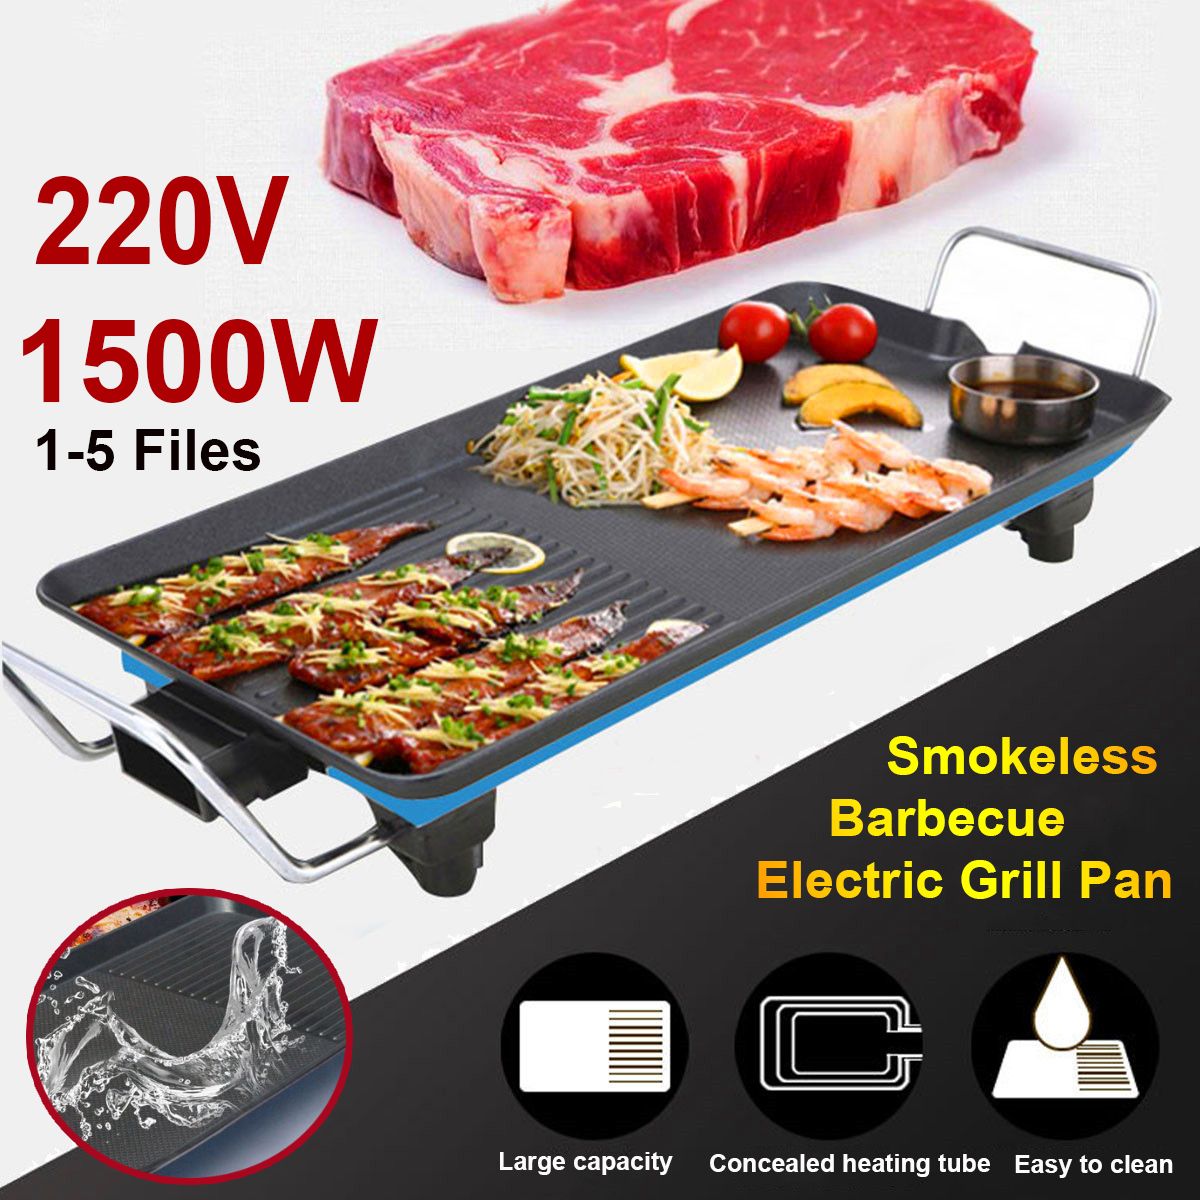 68x28cm-Korean-style-Household-Electric-Grill-Smokeless-Non-Stick-Electric-Baking-Pan-1760020